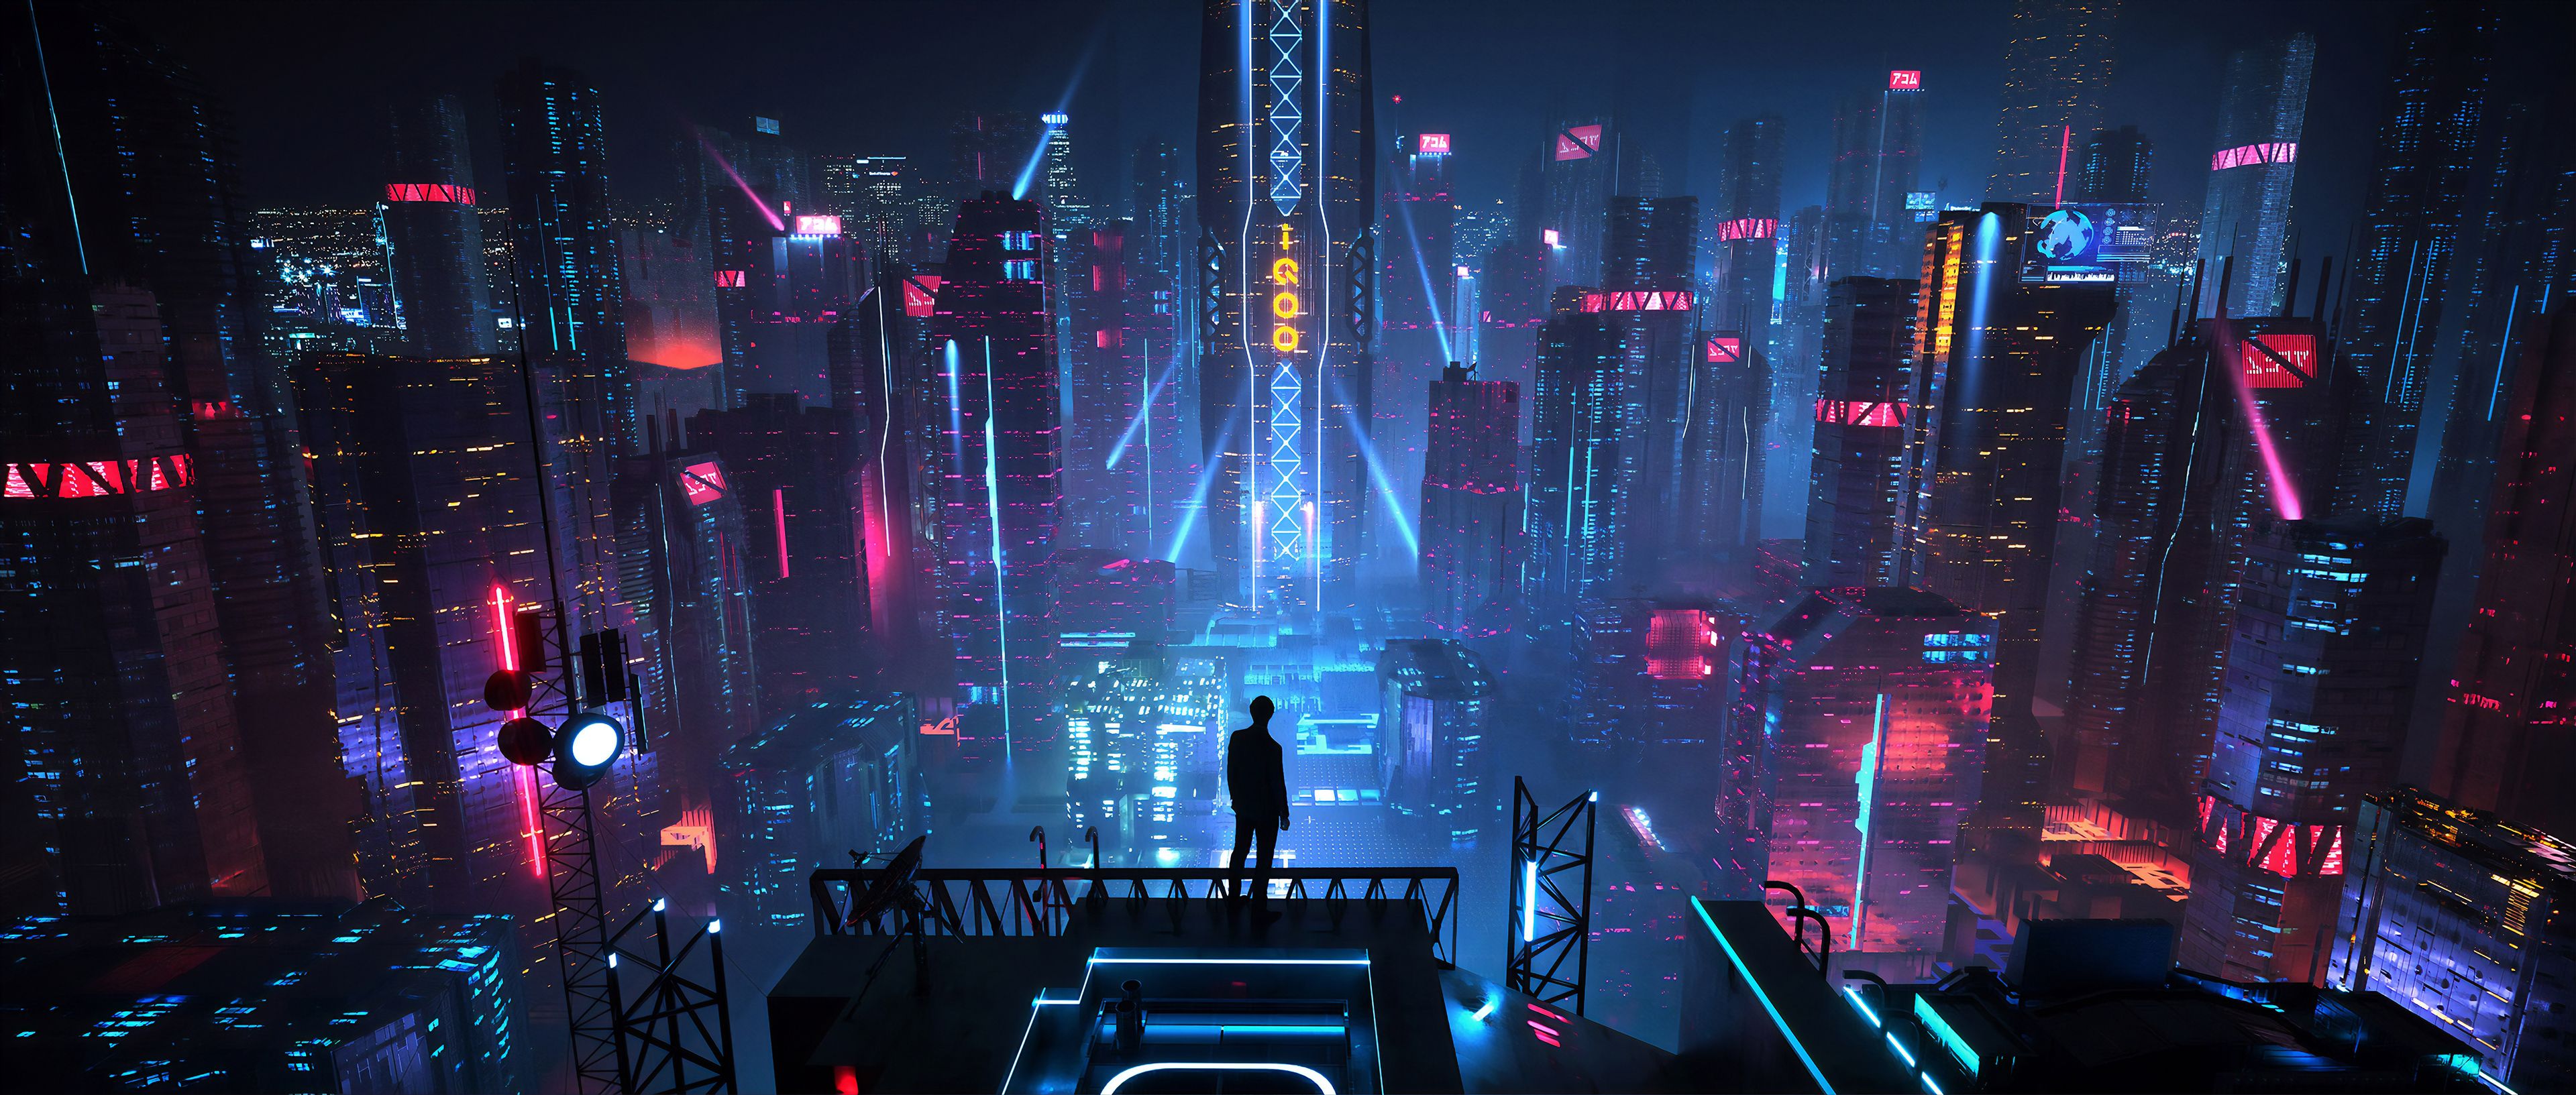 Digital Art Men City Futuristic Night Neon Science Fiction Futuristic City Cyberpunk Xuteng Pan Envi Wallpapers